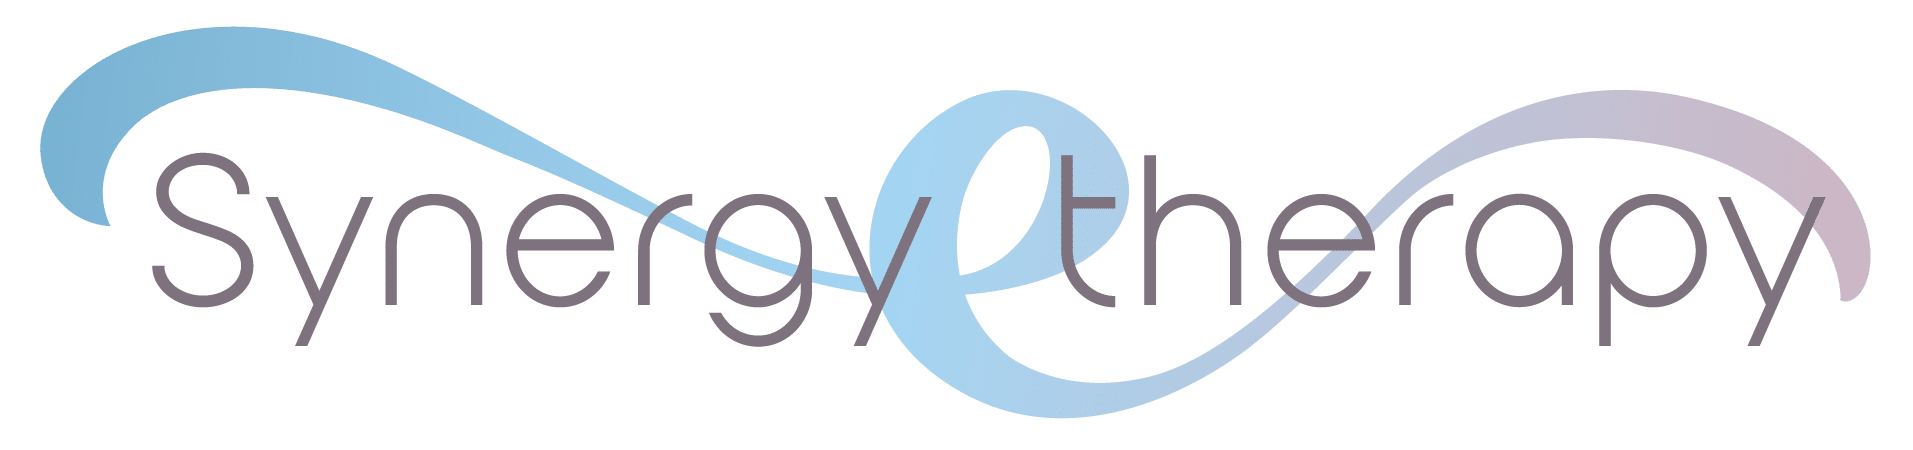 Synergy eTherapy Logo